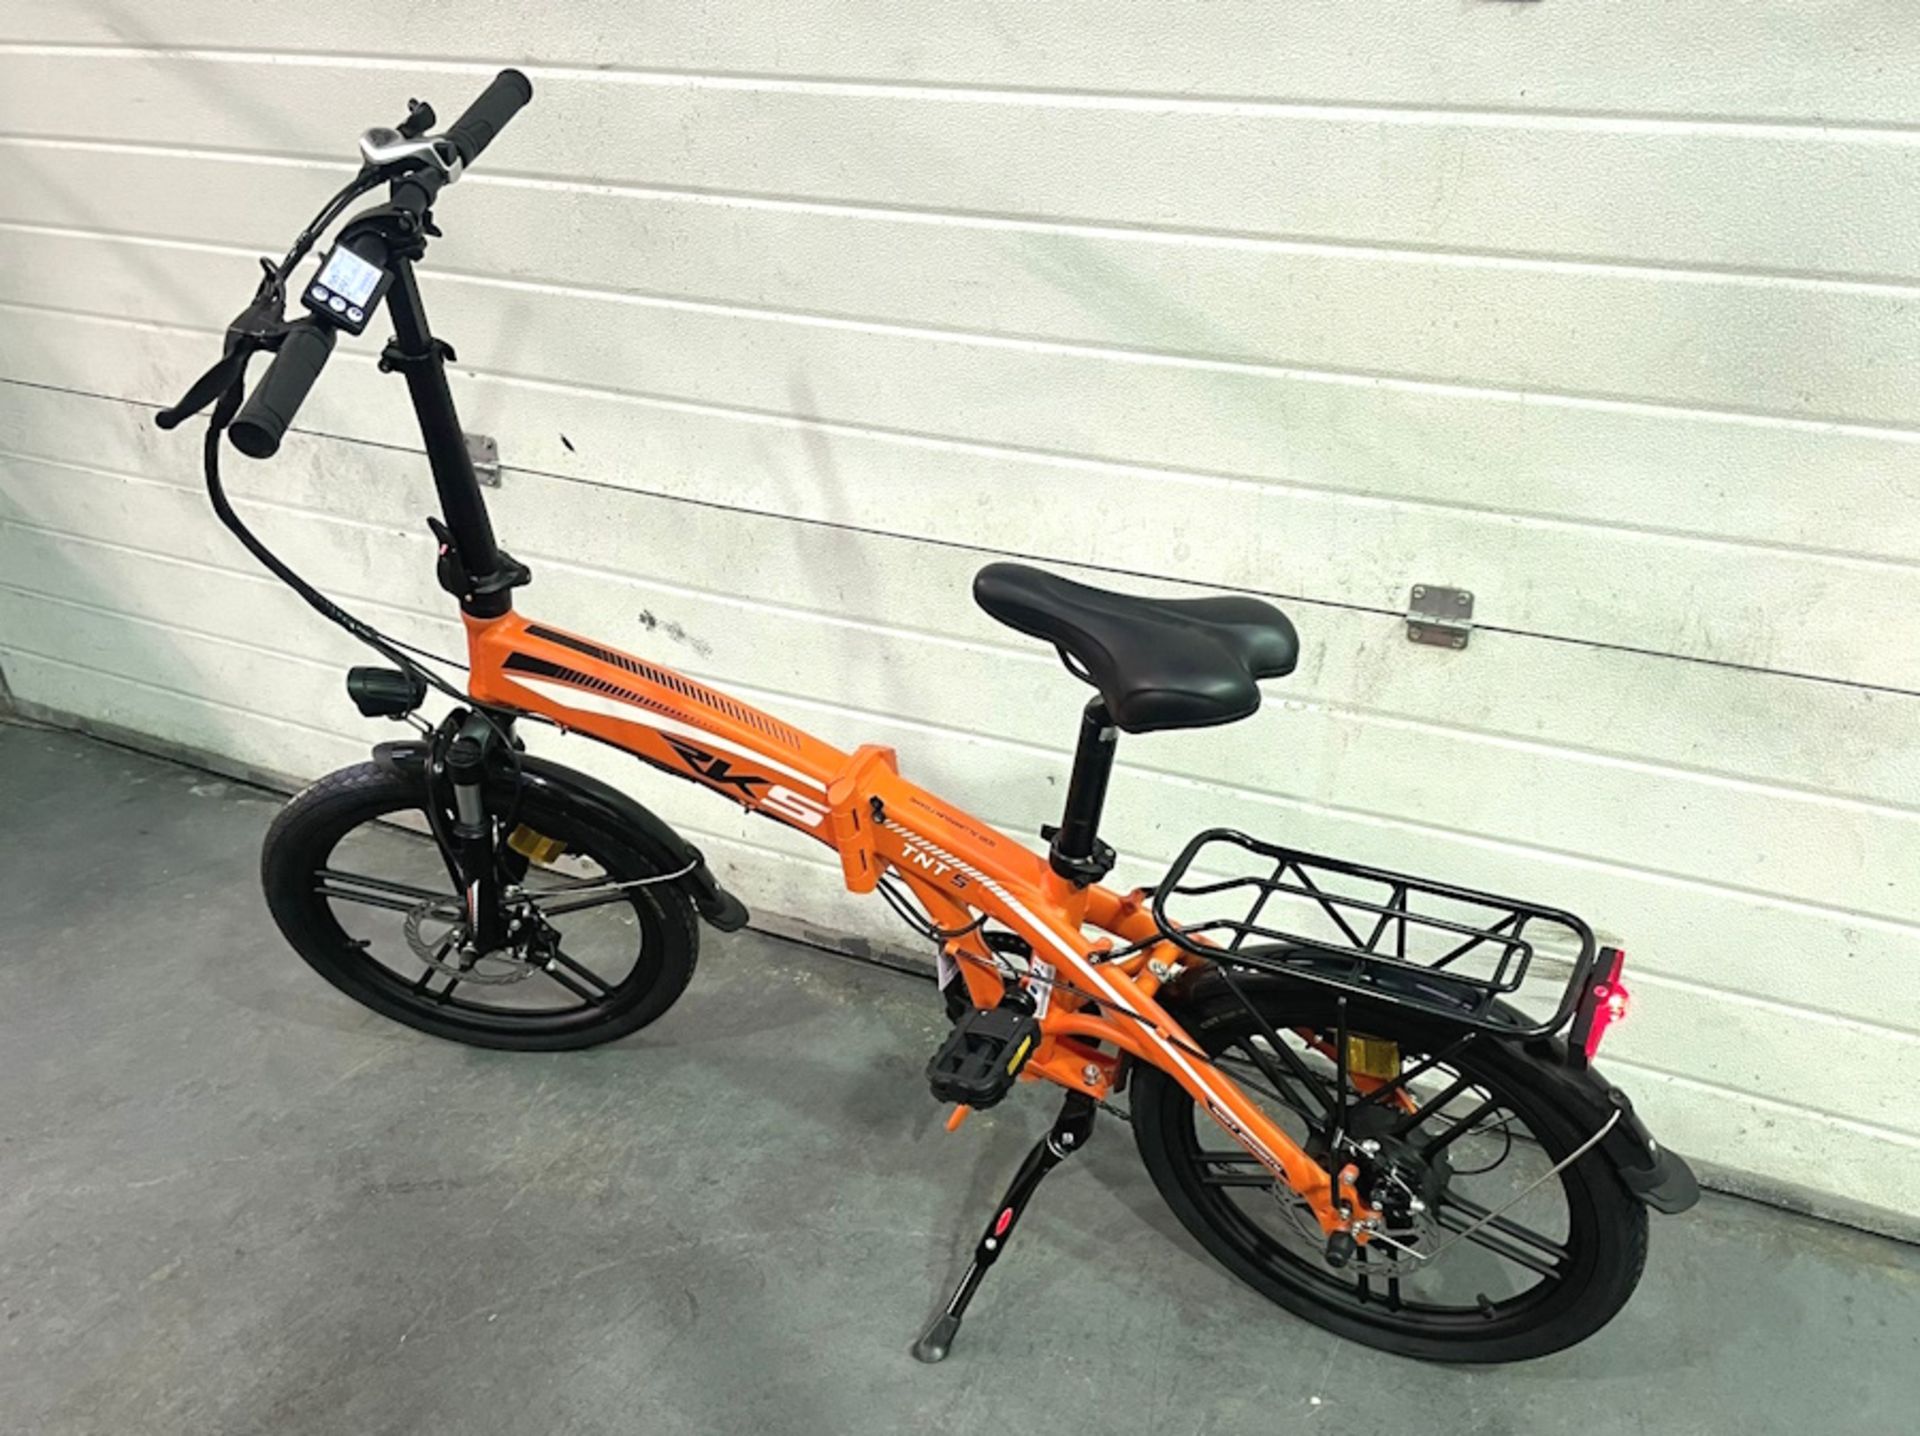 RKS TNT 5 Pro folding e-bike, orange, - Image 5 of 6